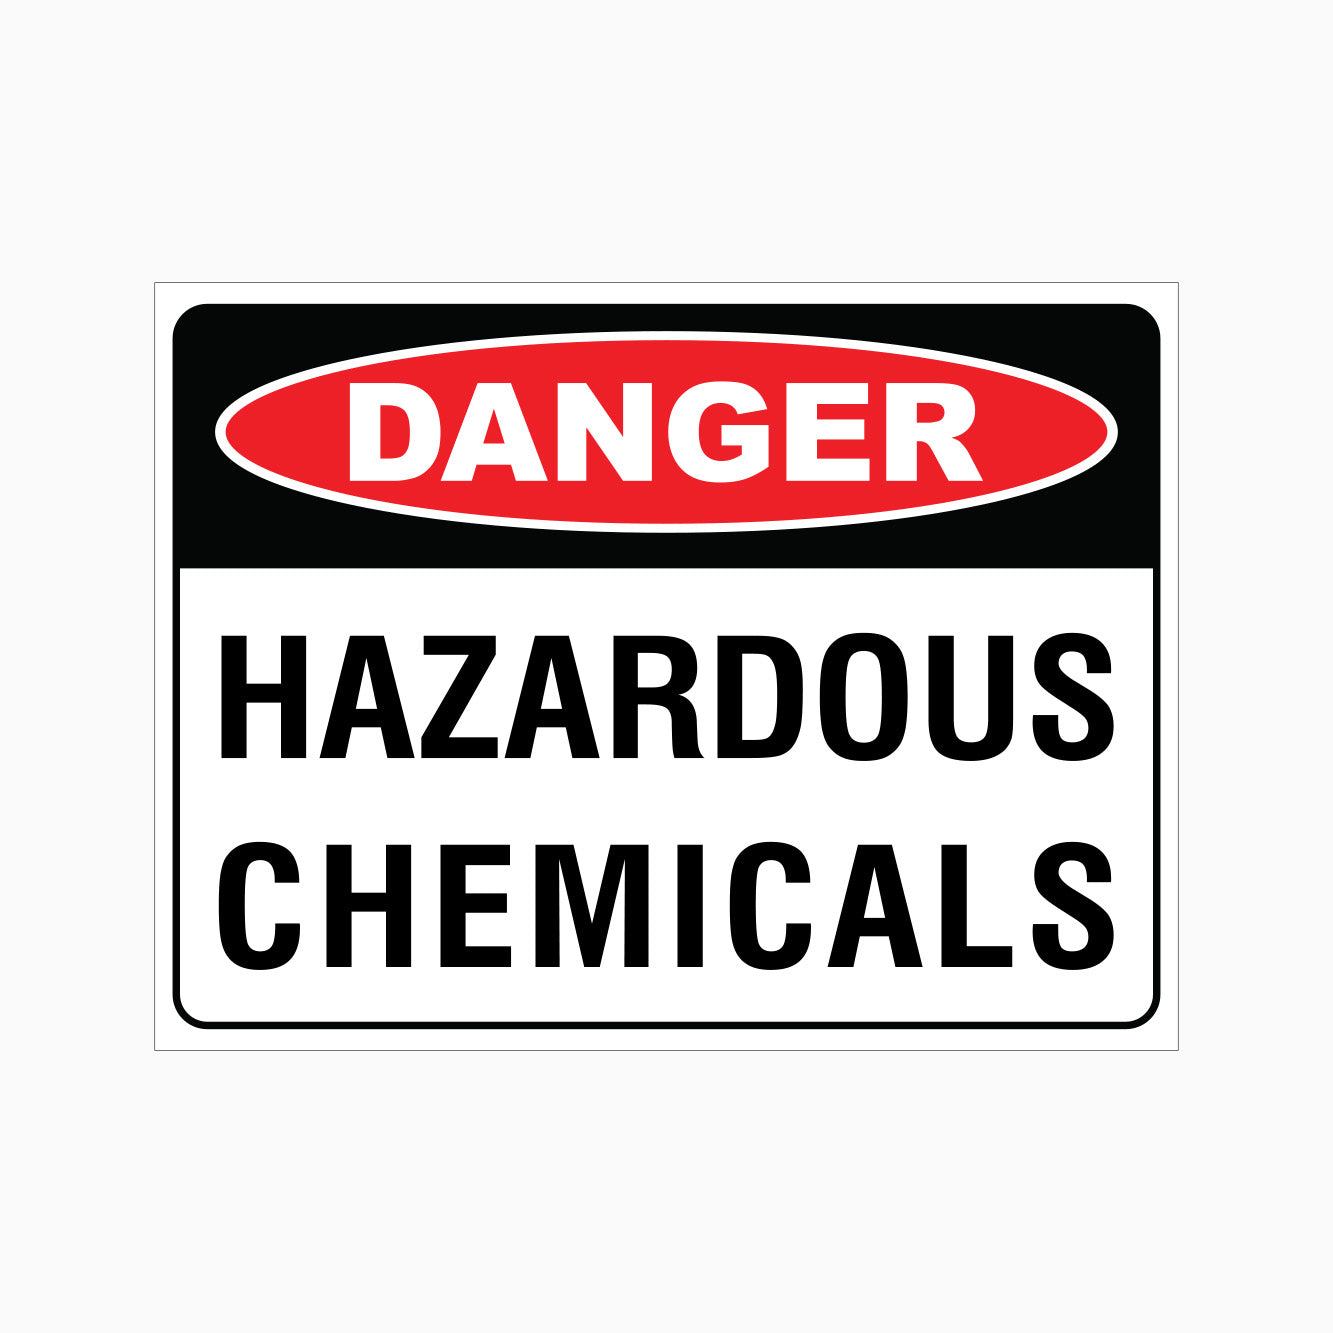 DANGER HAZARDOUS CHEMICALS SIGN - GET SIGNS